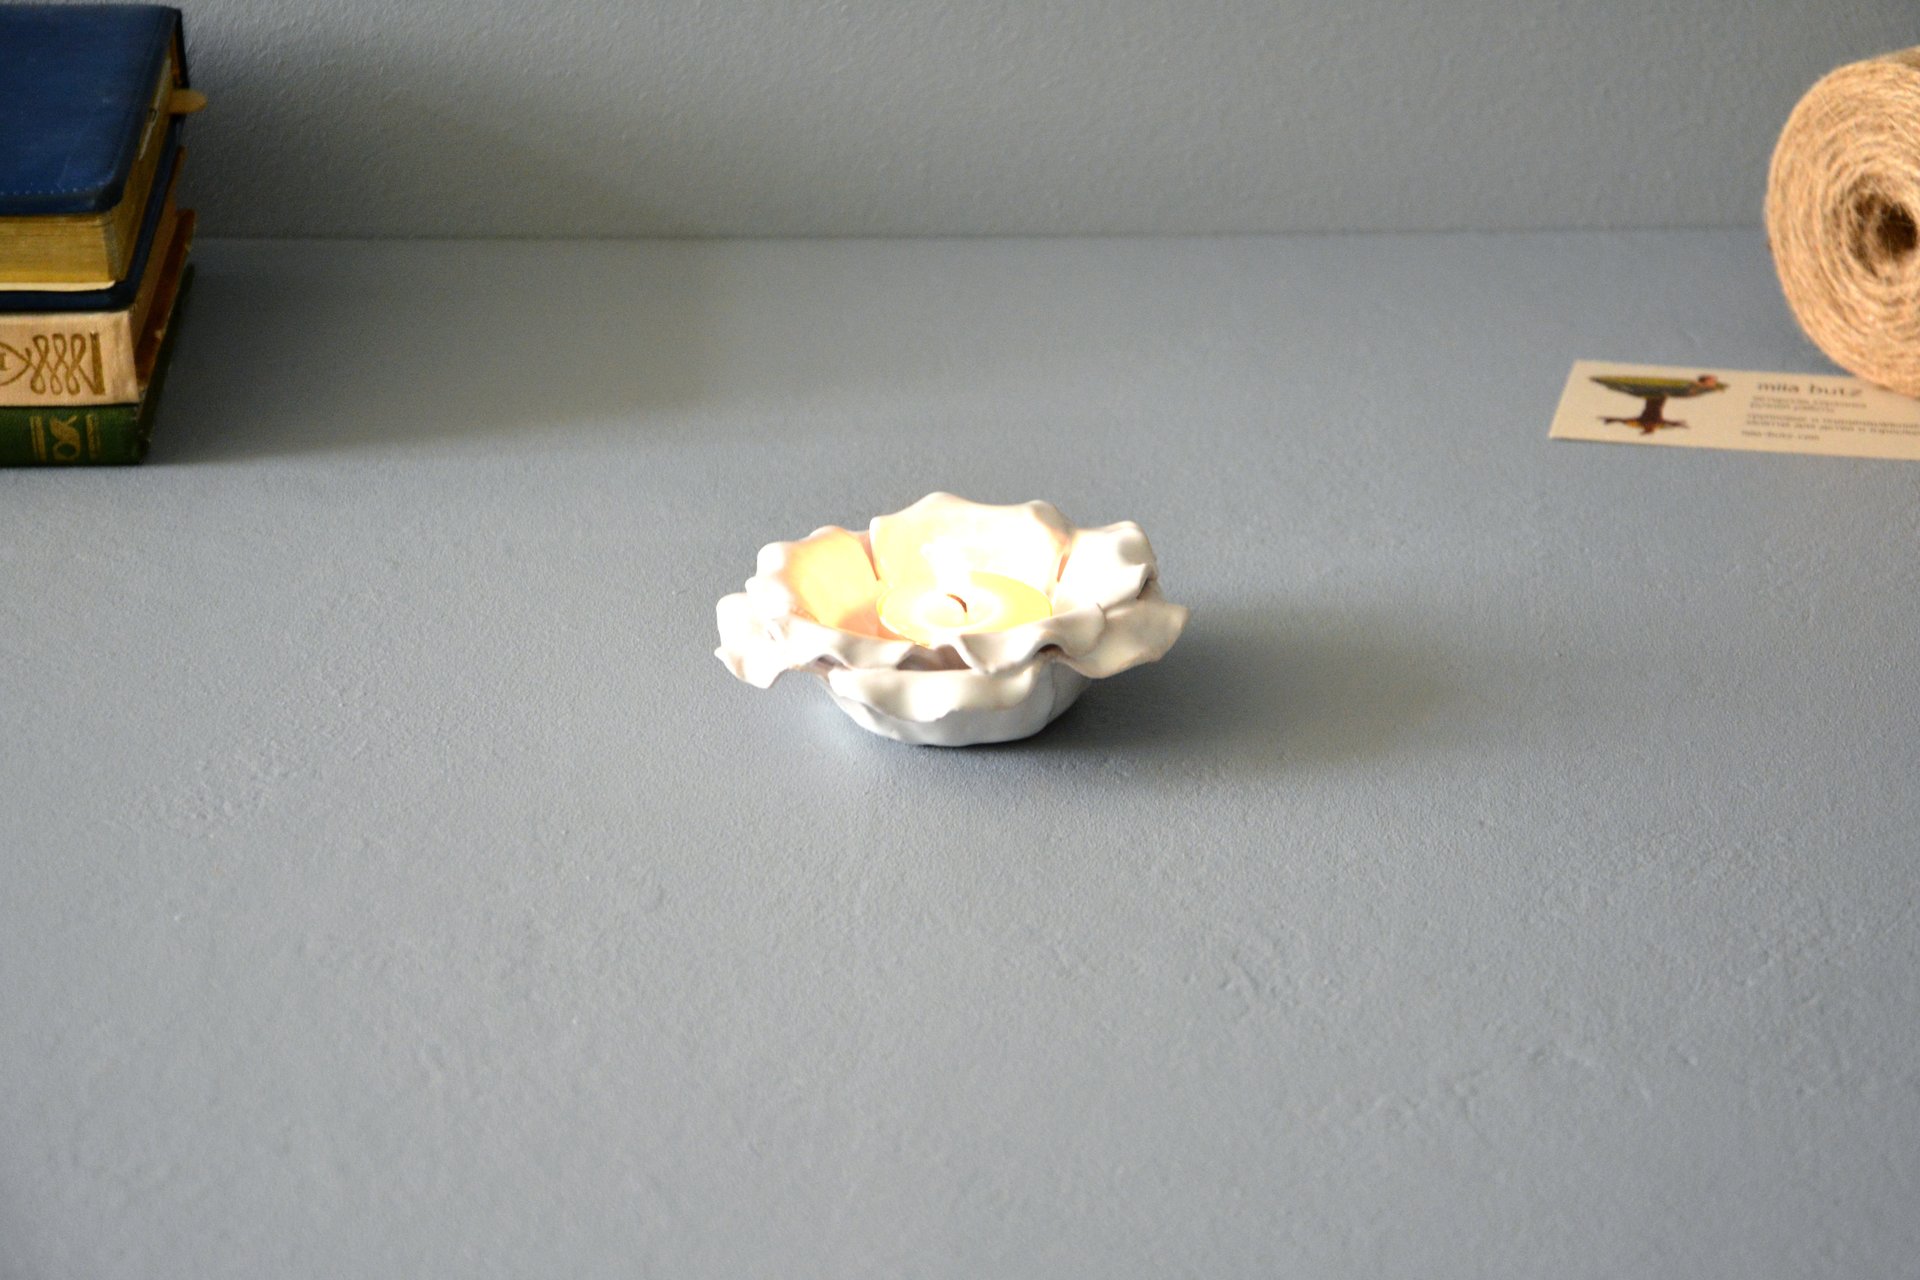 Candlestick White flower - Ceramic Candl-holders, diameter - 11.5 cm, photo 3 of 5.